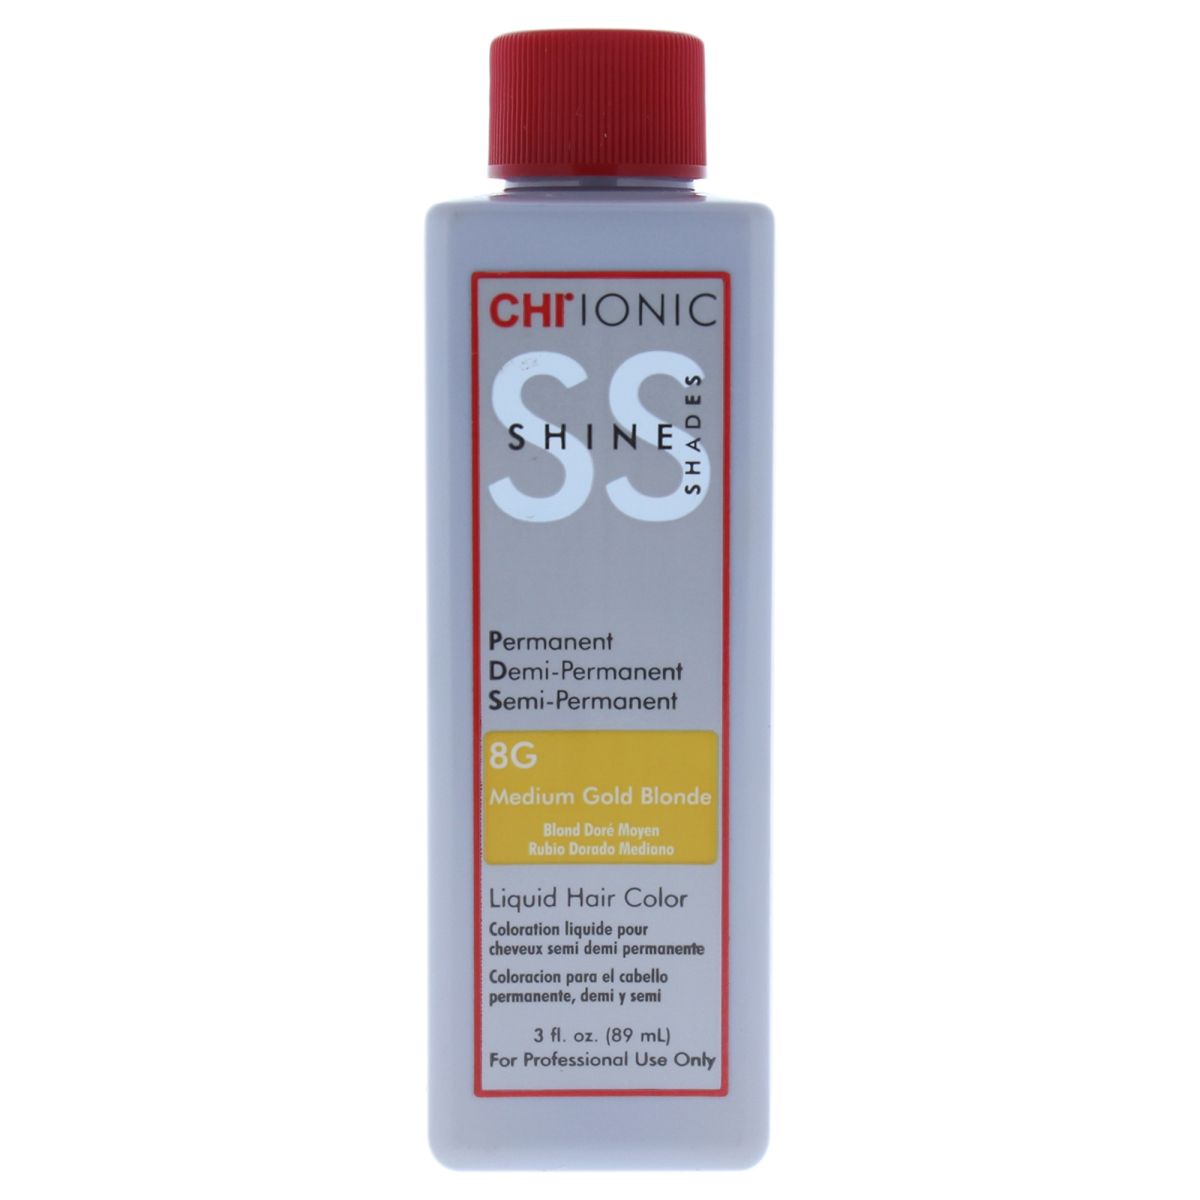 I0084046 Ionic Shine Shades Liquid Hair Color For Unisex - 8g Medium Gold Blonde - 3 Oz